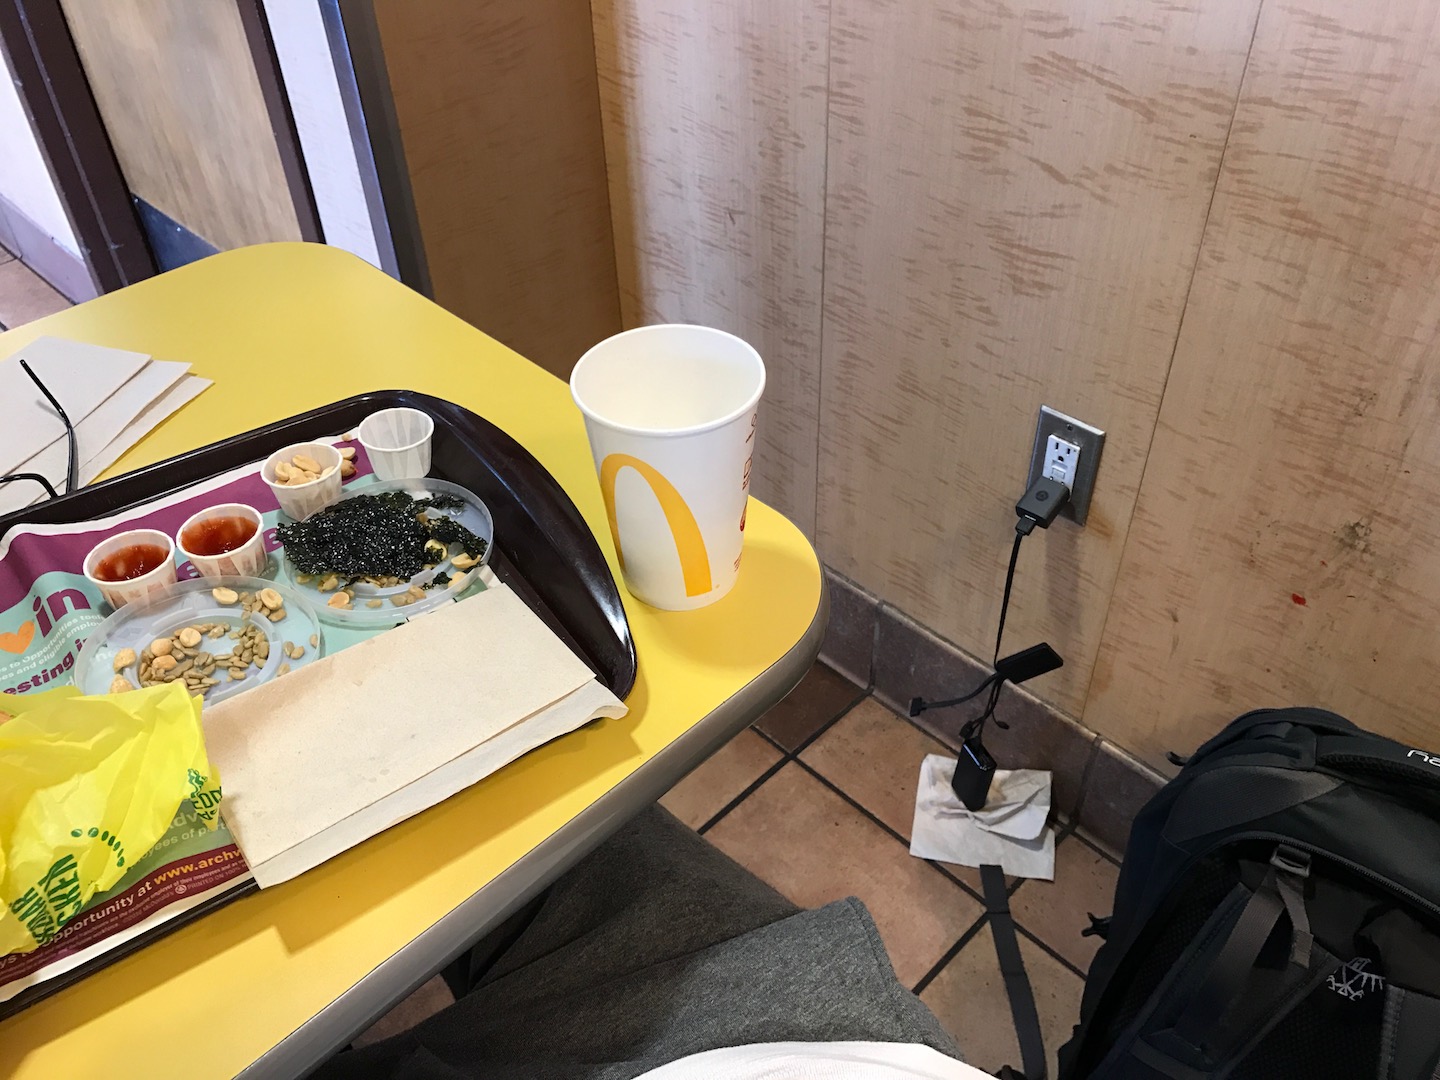 My $1.29 setup at McDonalds